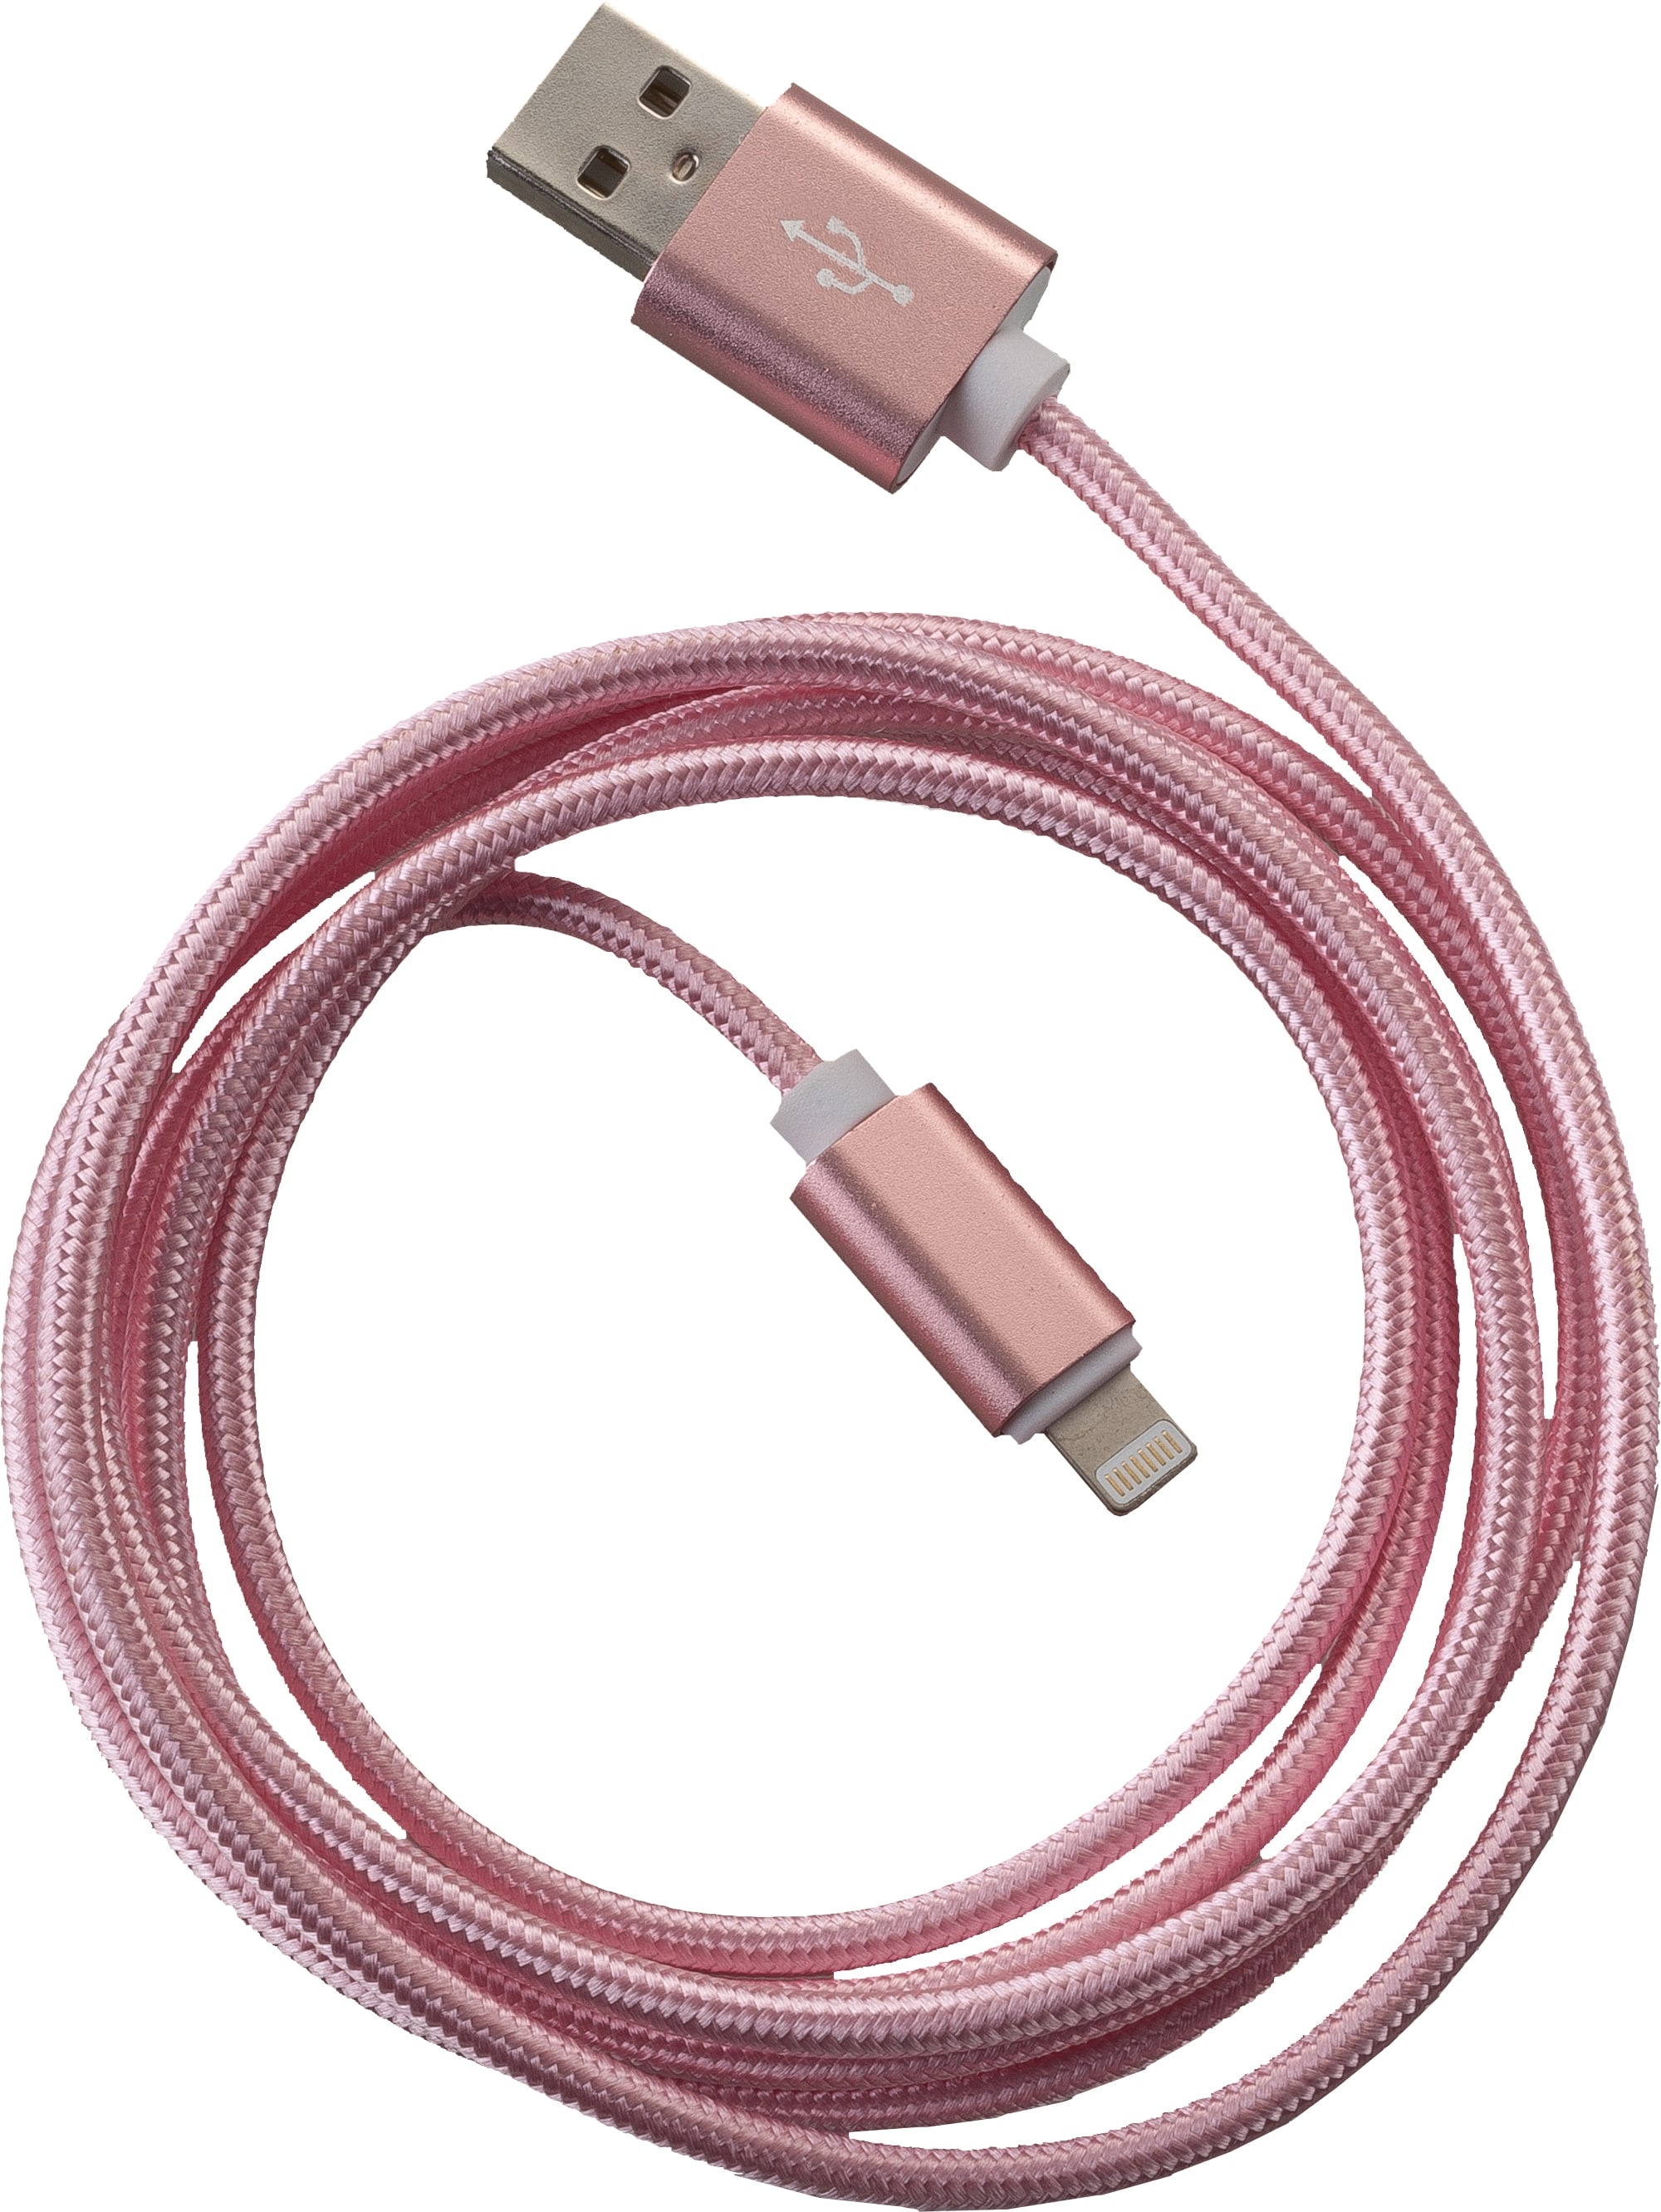 Peter Jäckel FASHION 1,5m USB Data Cable Rose für Apple Lightning mit Sync- und Ladefunktion (1.50 m, USB 2.0), USB Kabel